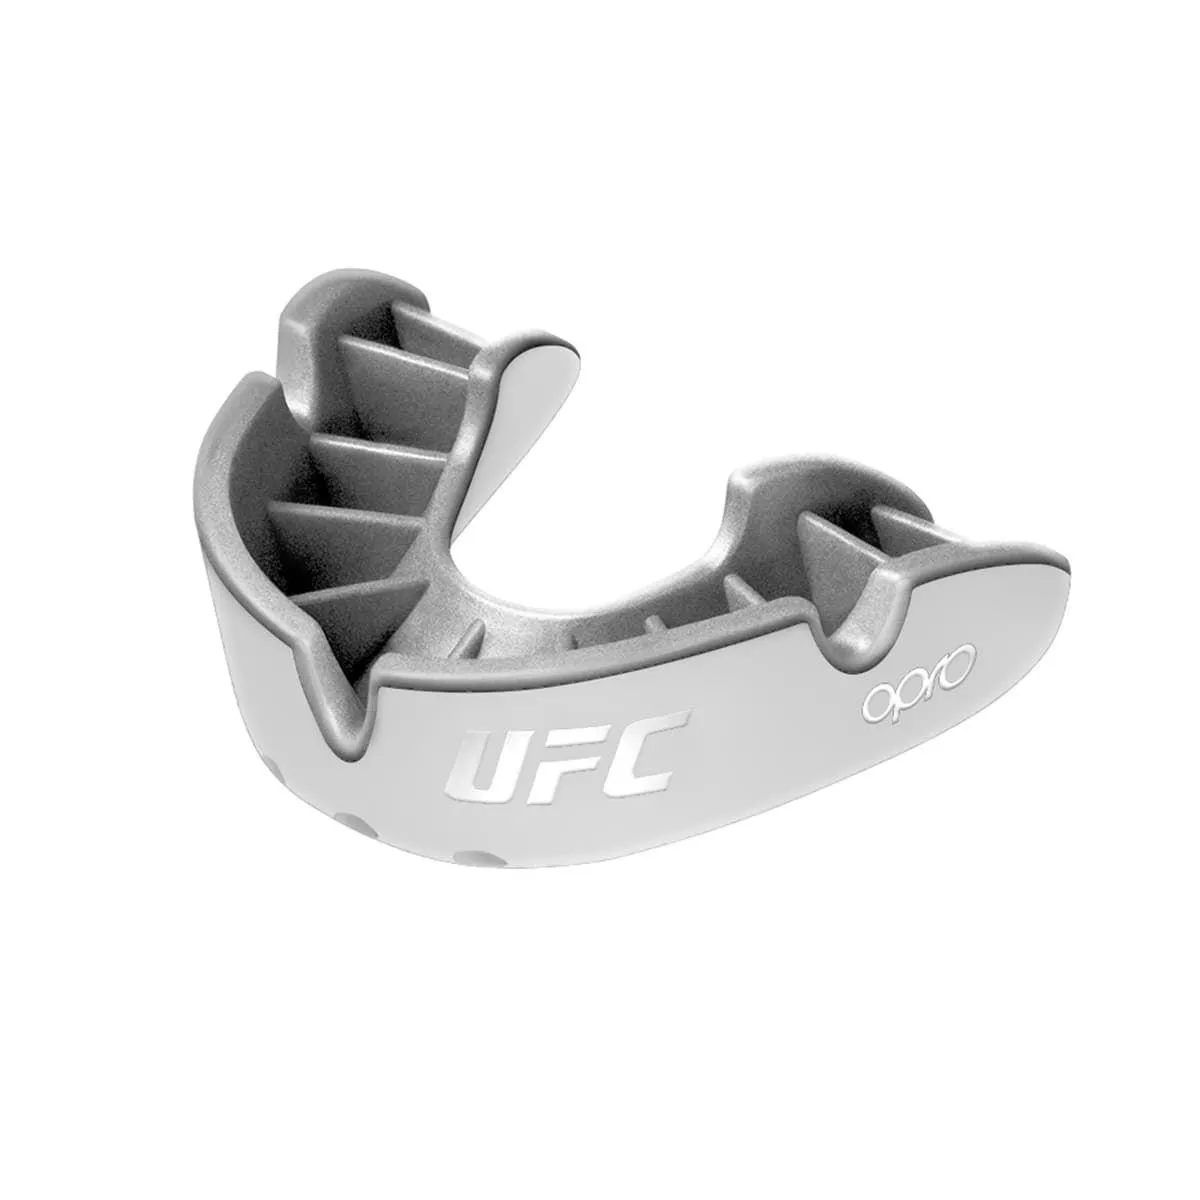 OPRO "UFC" Zahnschutz Silber 2022 weiß/ silber